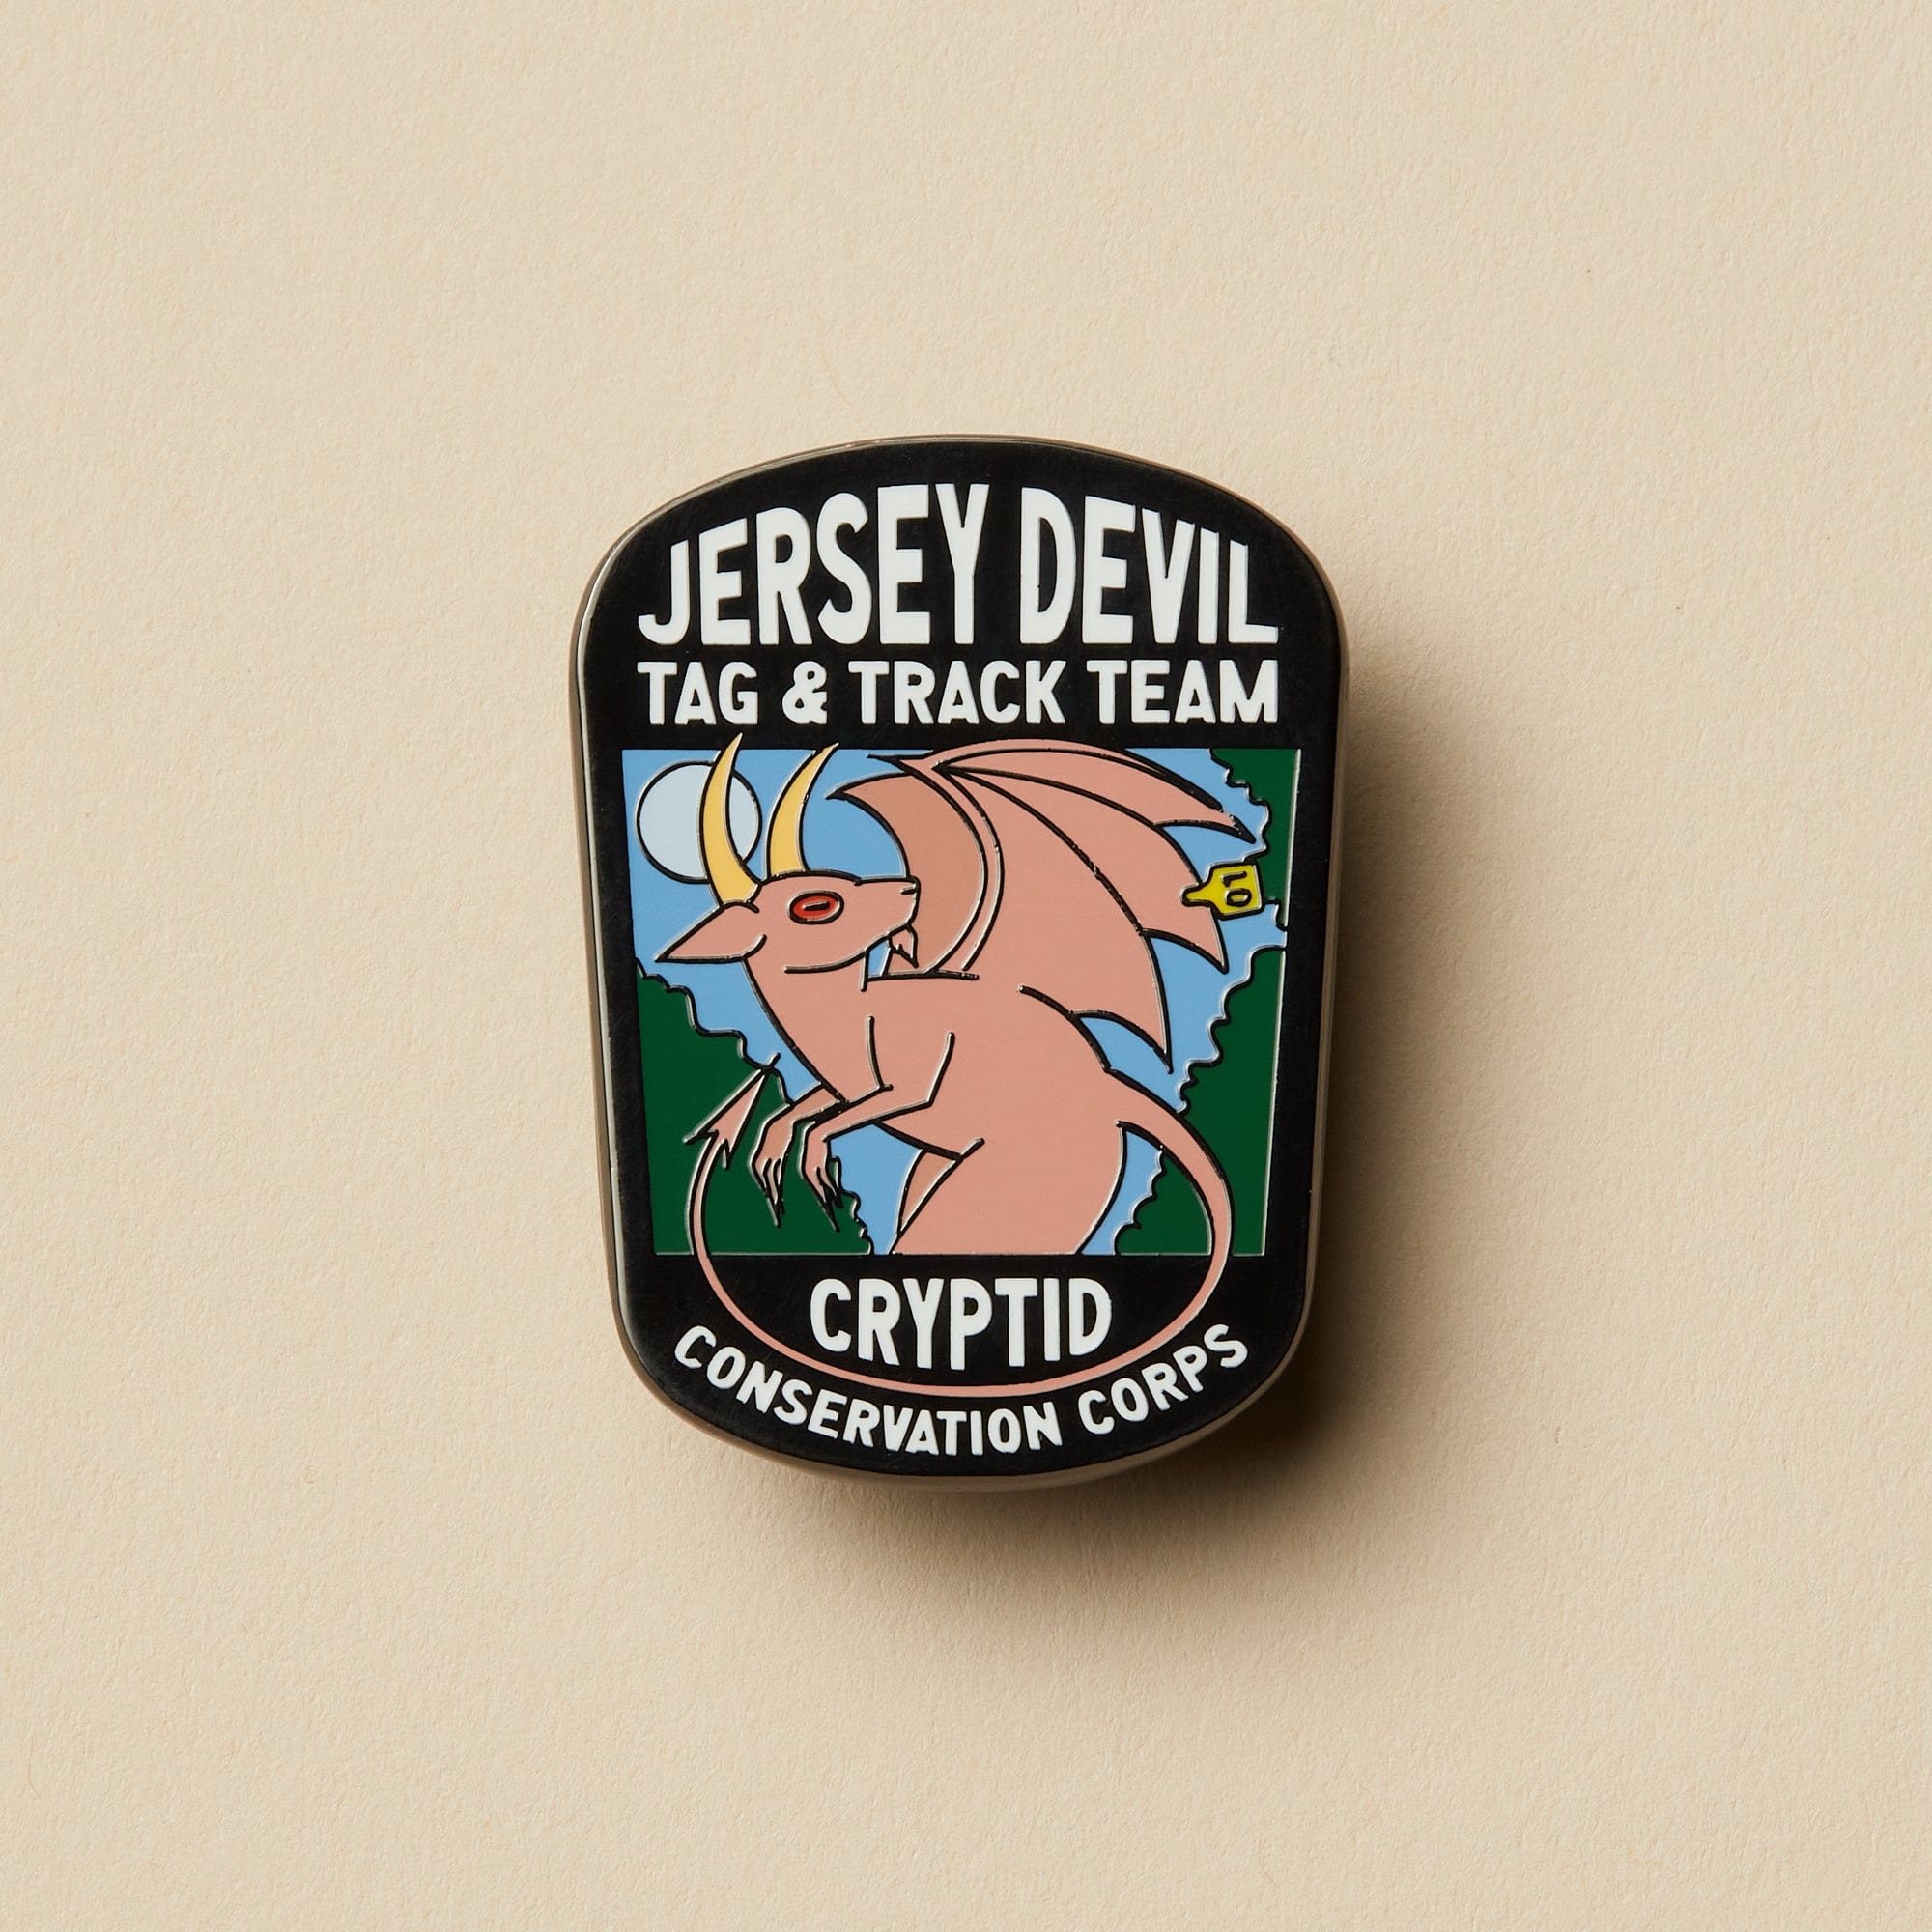 Jersey Devil Set: Pin, Sticker, and Patch